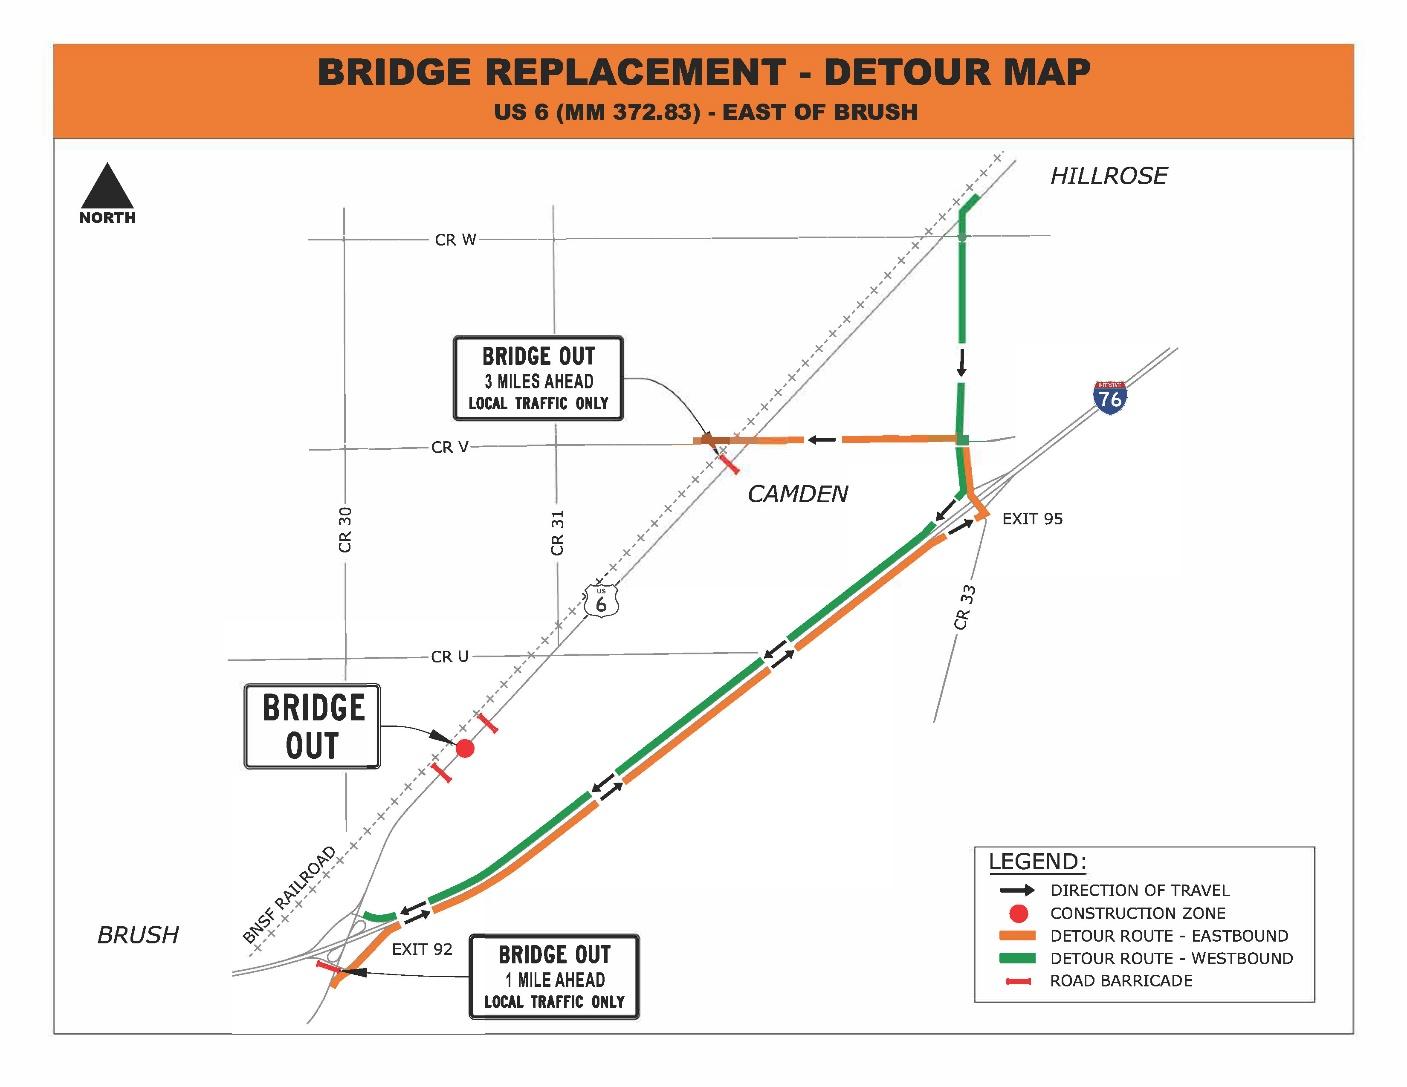 Bridge Replacement  Detour Map on US 6 East of Brush detail image